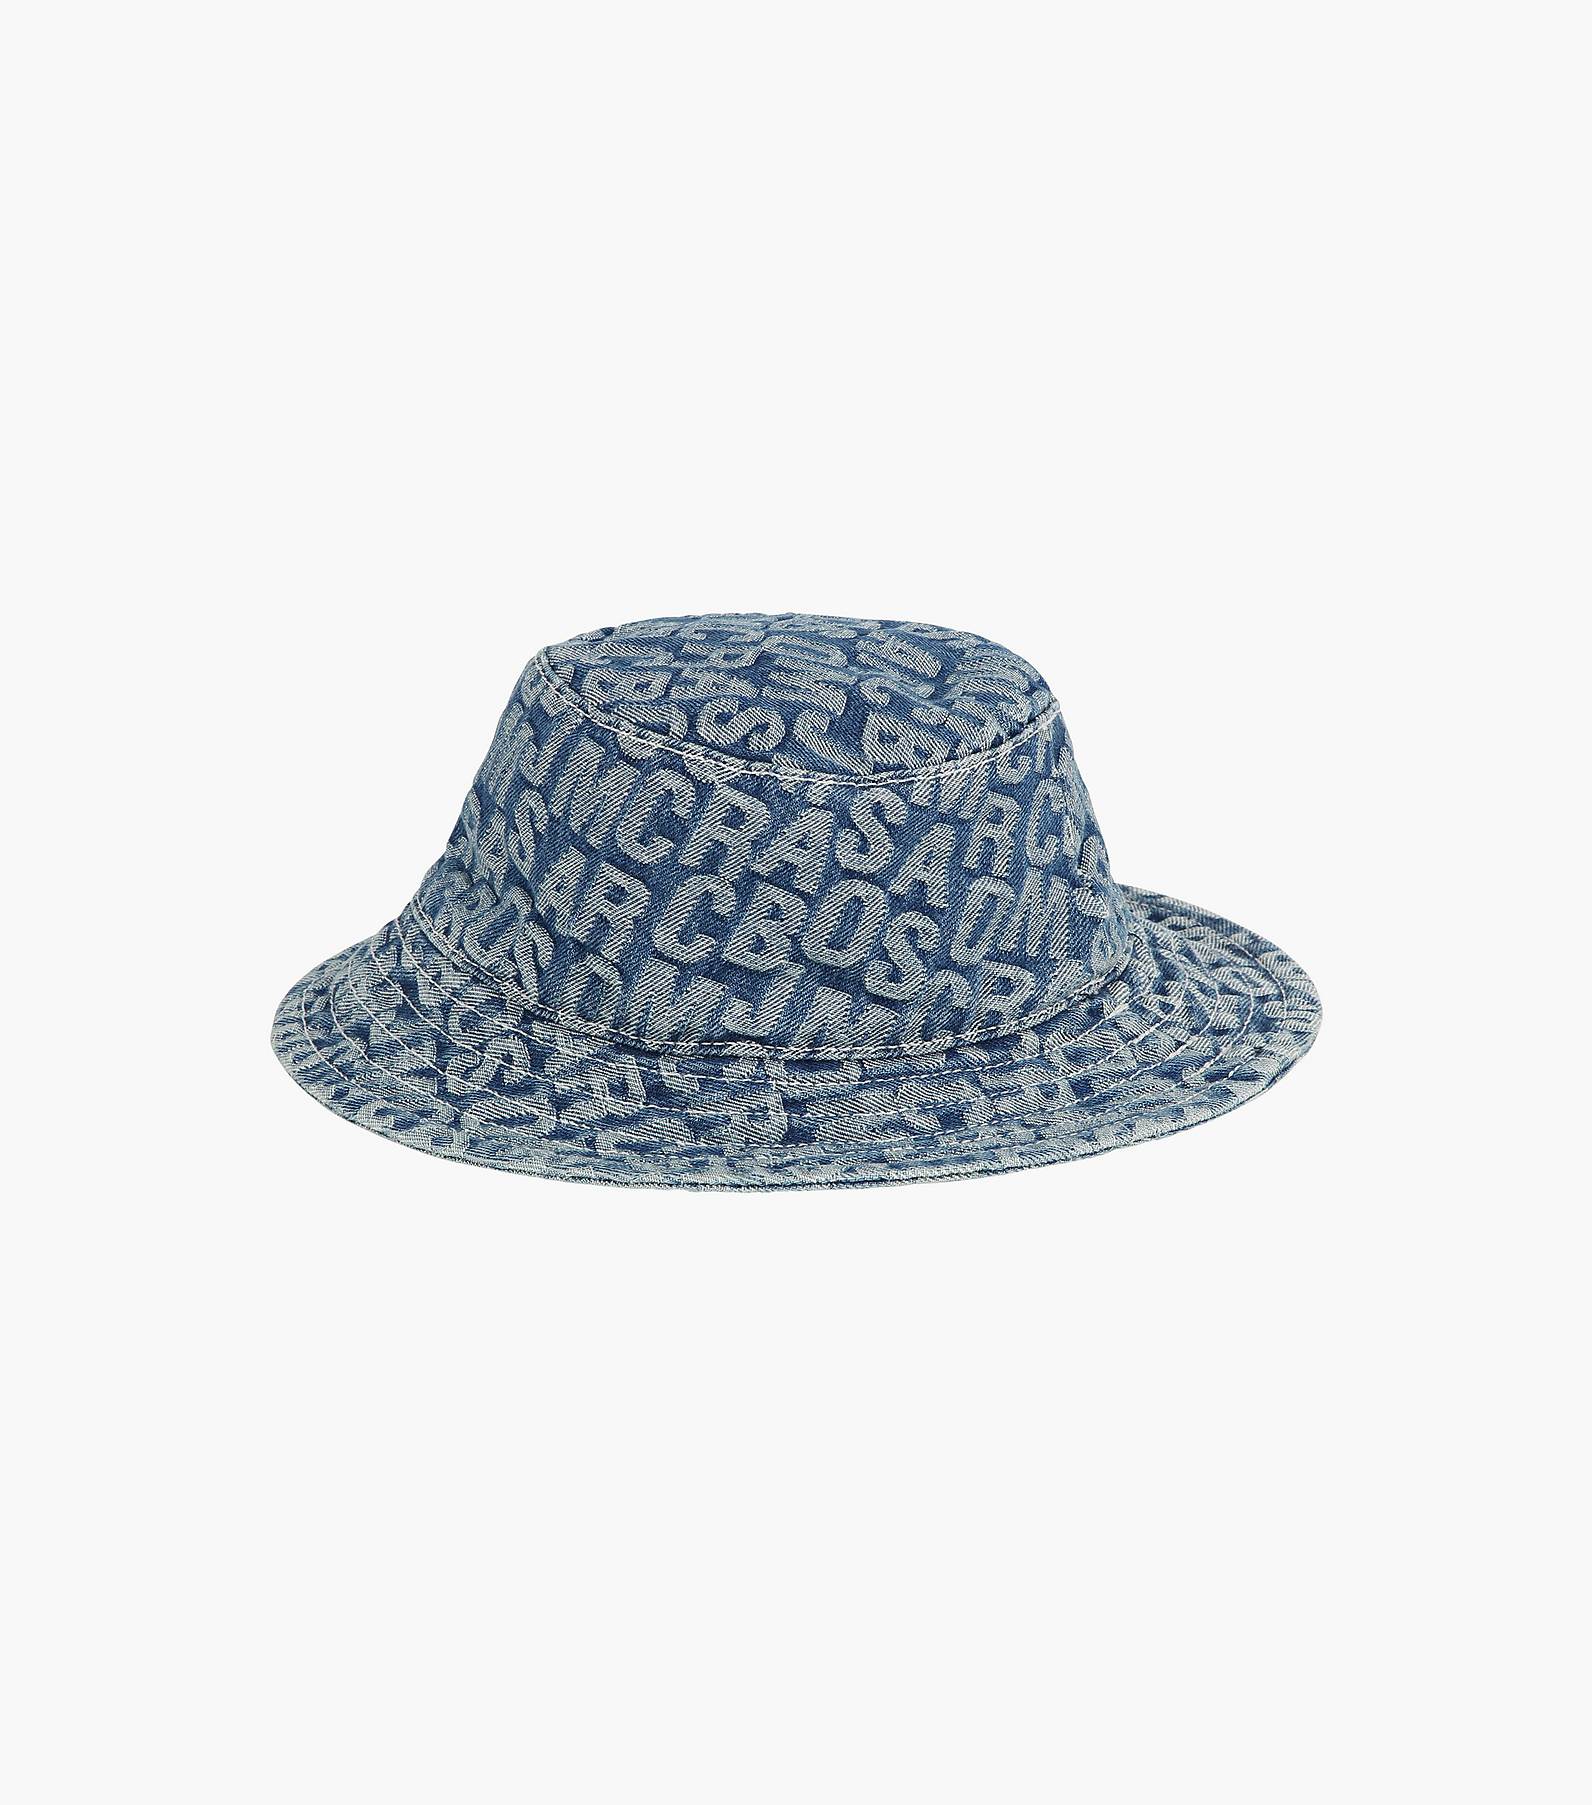 Jumbled Monogram牛仔渔夫帽, Marc Jacobs